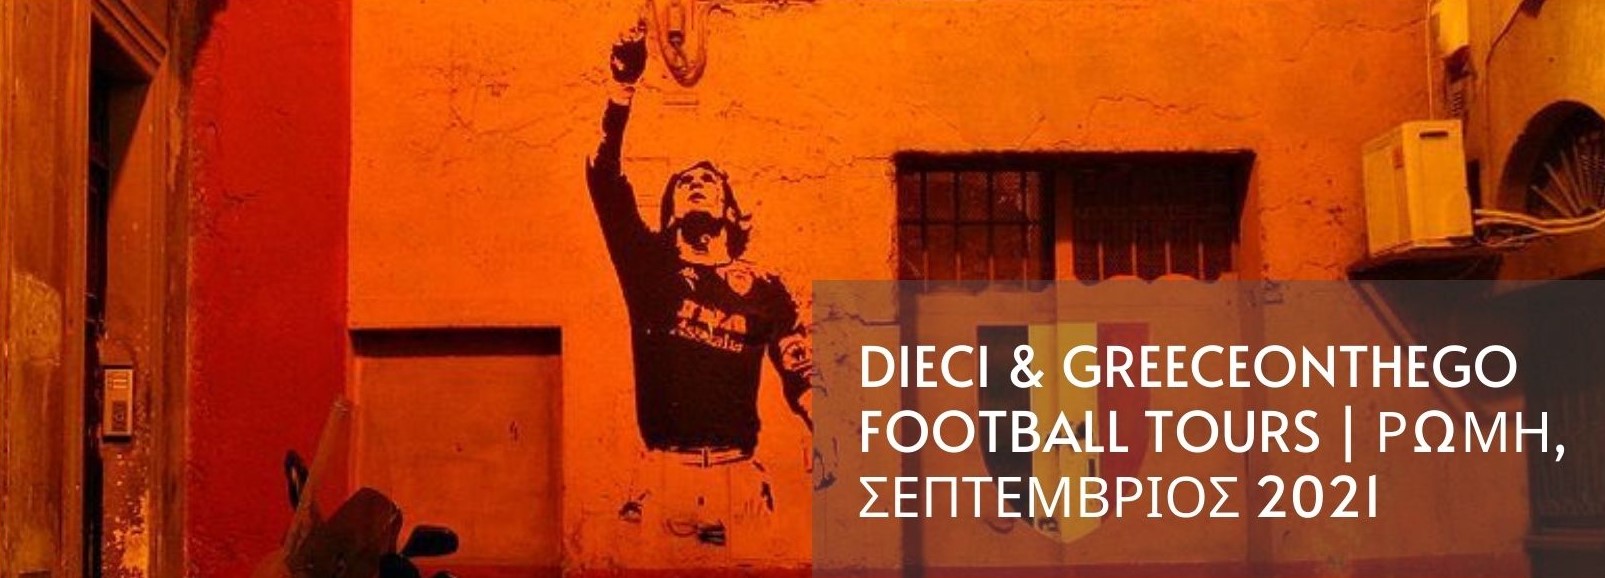 DIECI & GREECEONTHEGO FOOTBALL TOURS ΡΩΜΗ, ΣΕΠΤΕΜΒΡΙΟΣ 2021